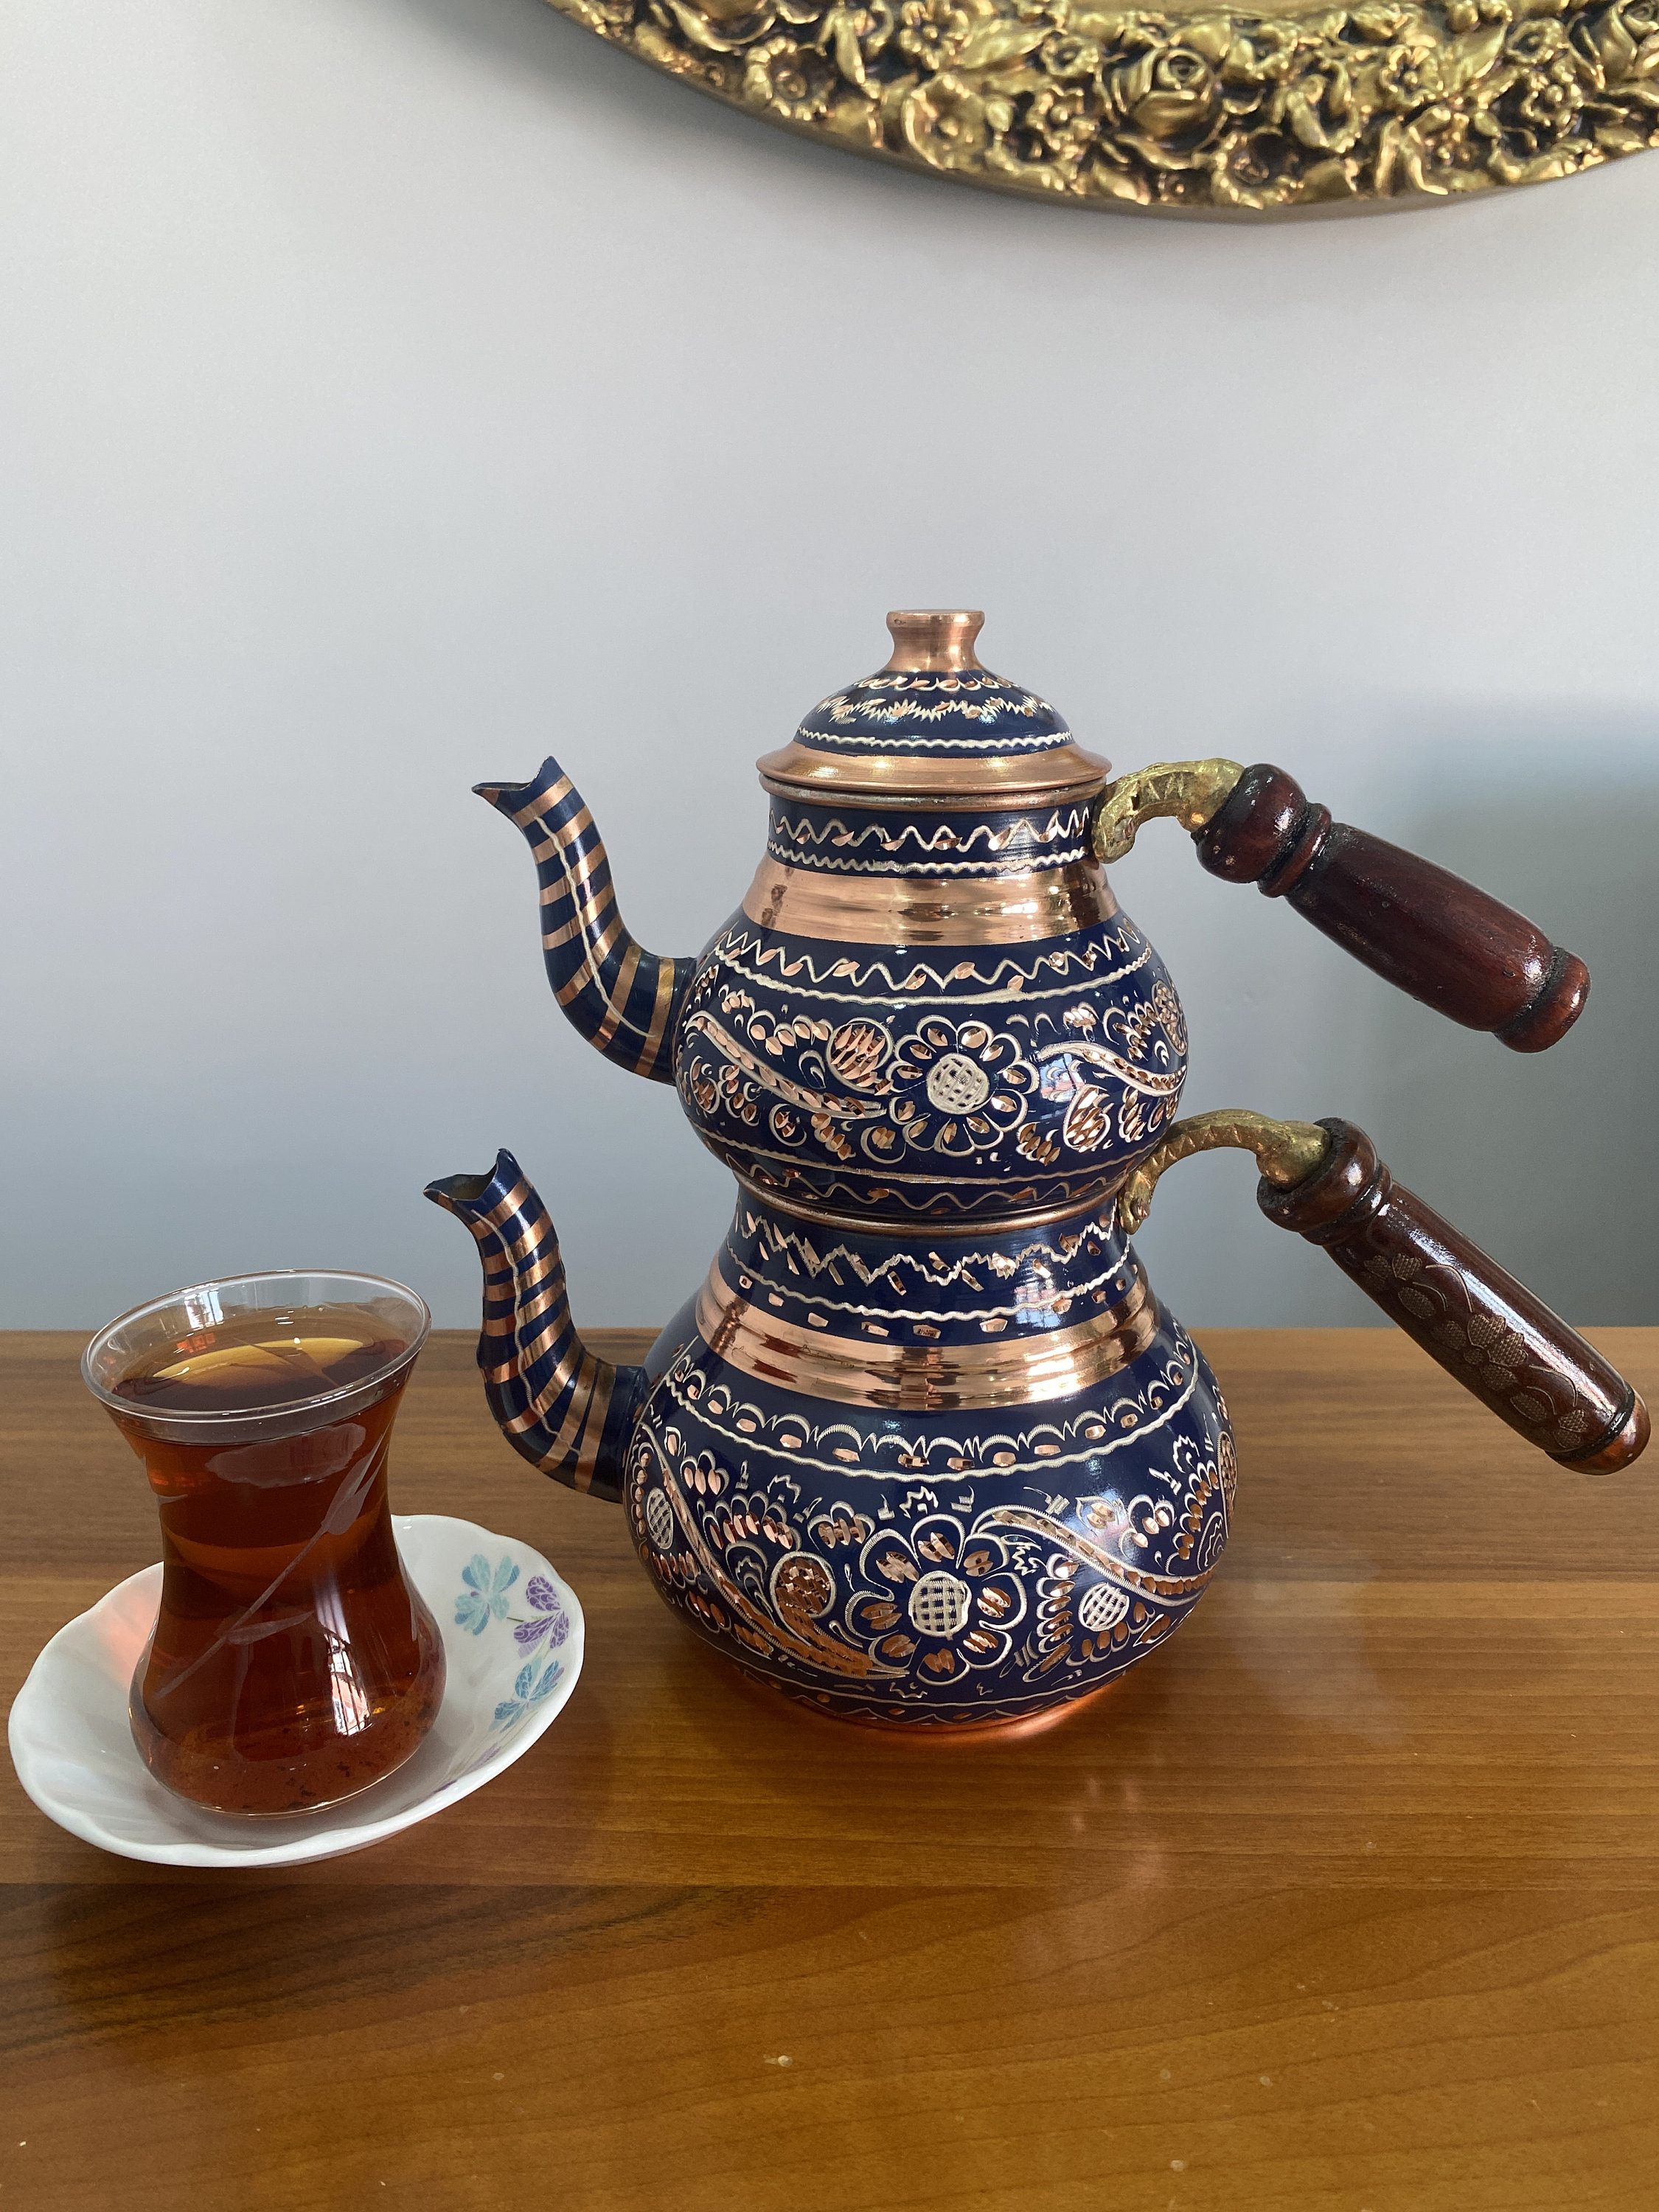 Saki Semaver Tea Maker Electric Water Kettle with Porcelain Tea Pot